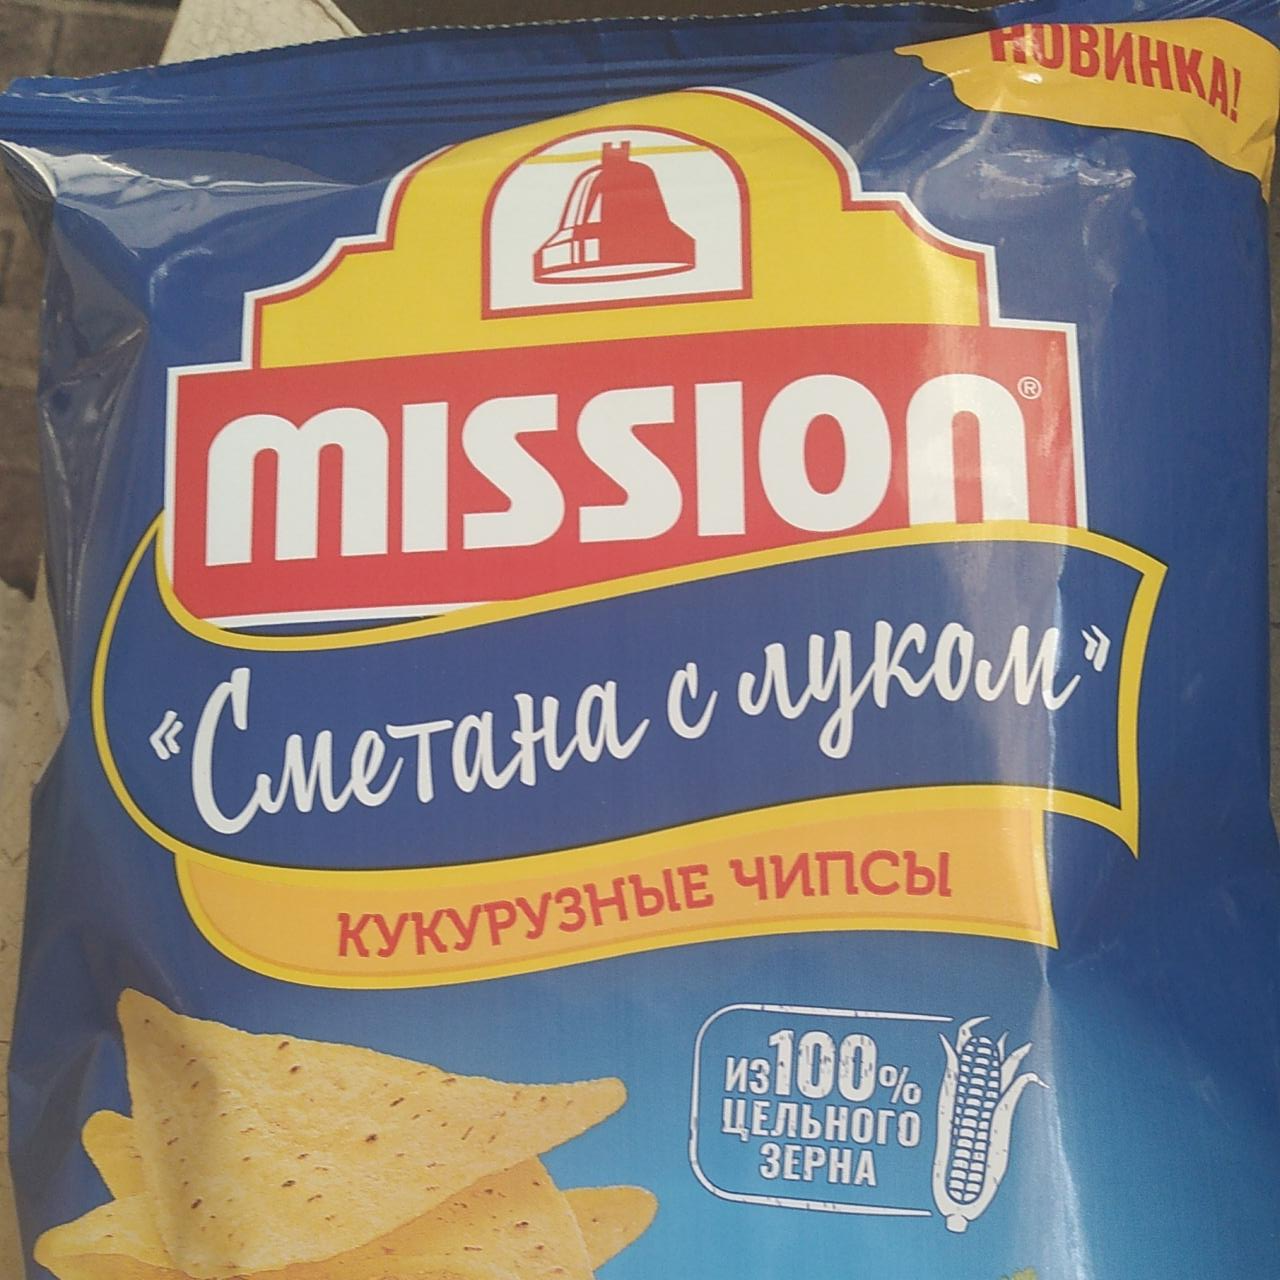 Фото - Кукурузные чипсы со вкусом сметана лук Mission